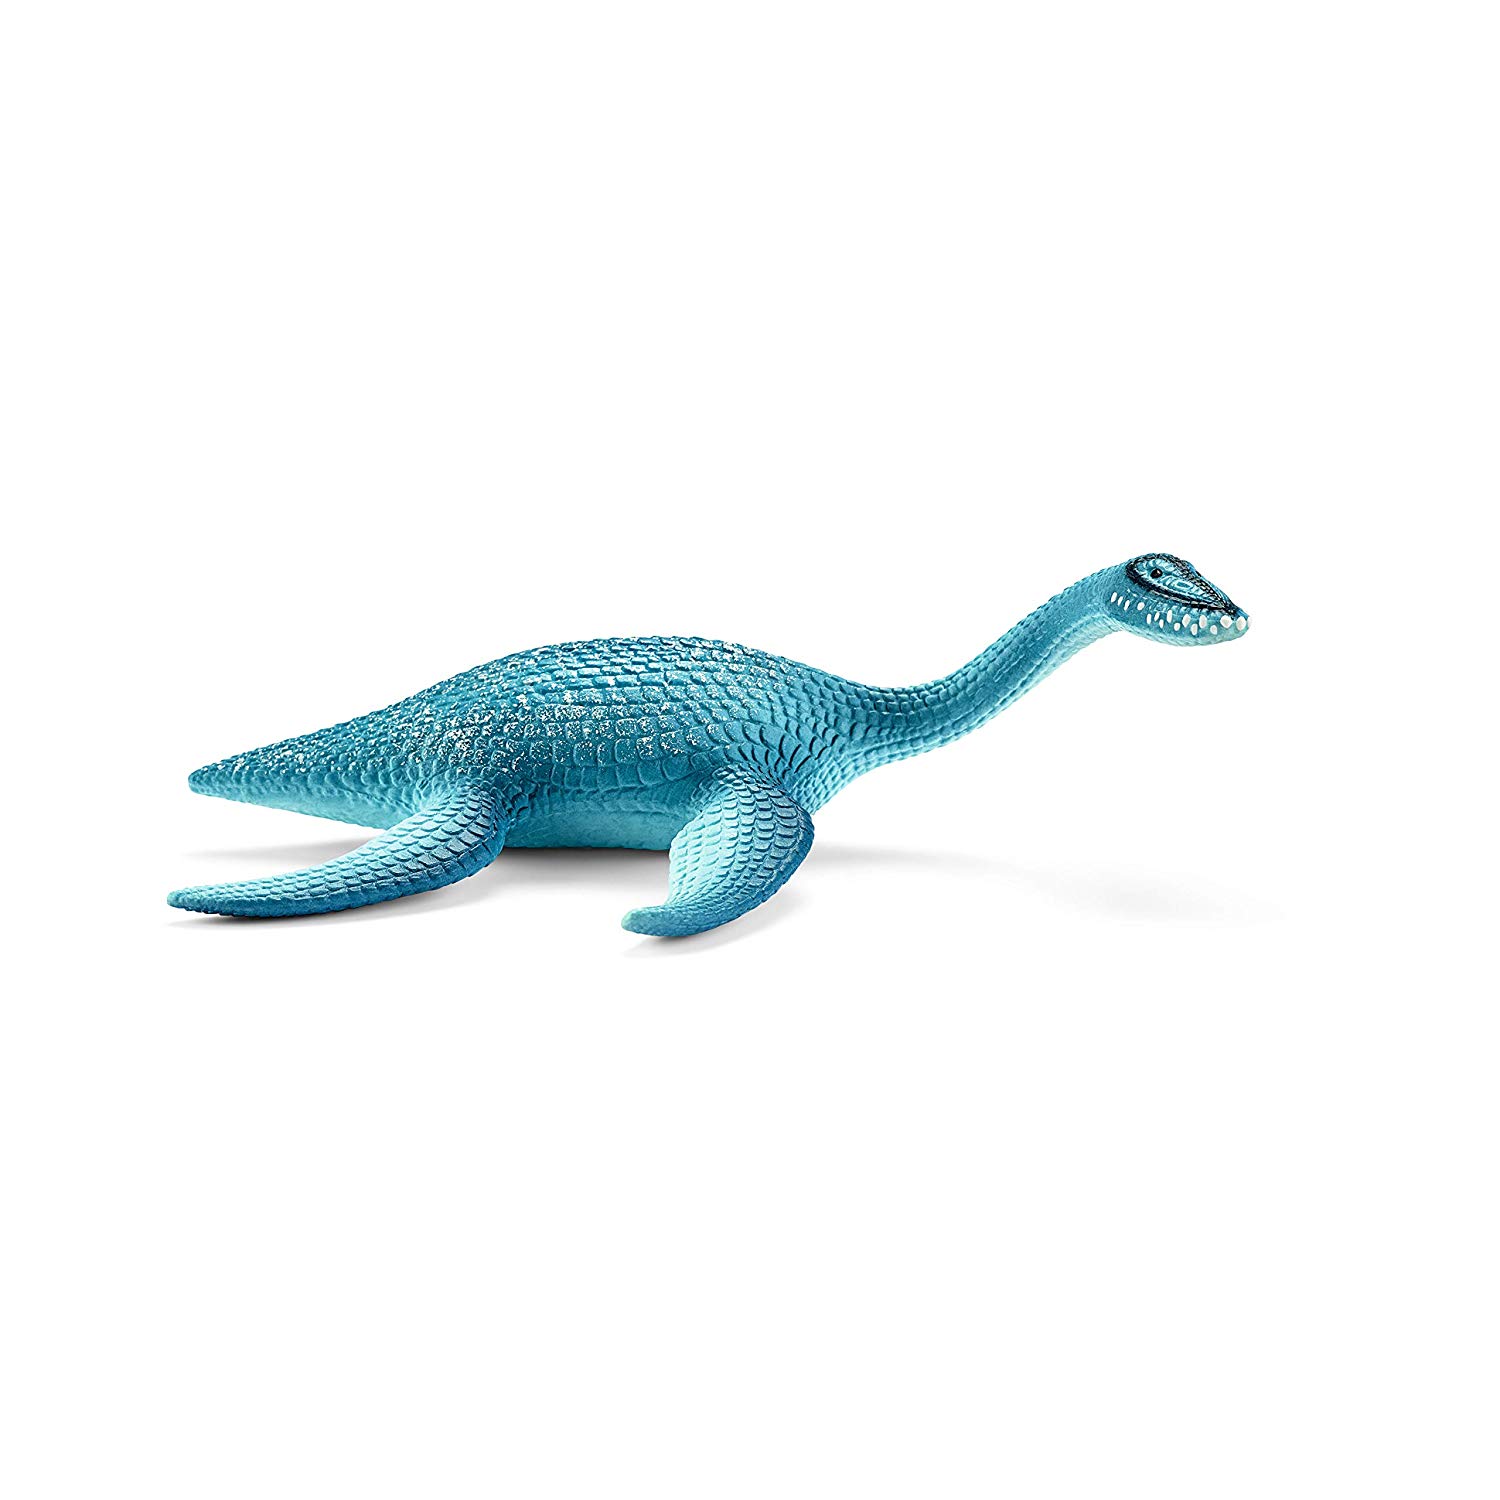 Schleich 15016 Plesiosaurus Toy Figure Multi-Coloured